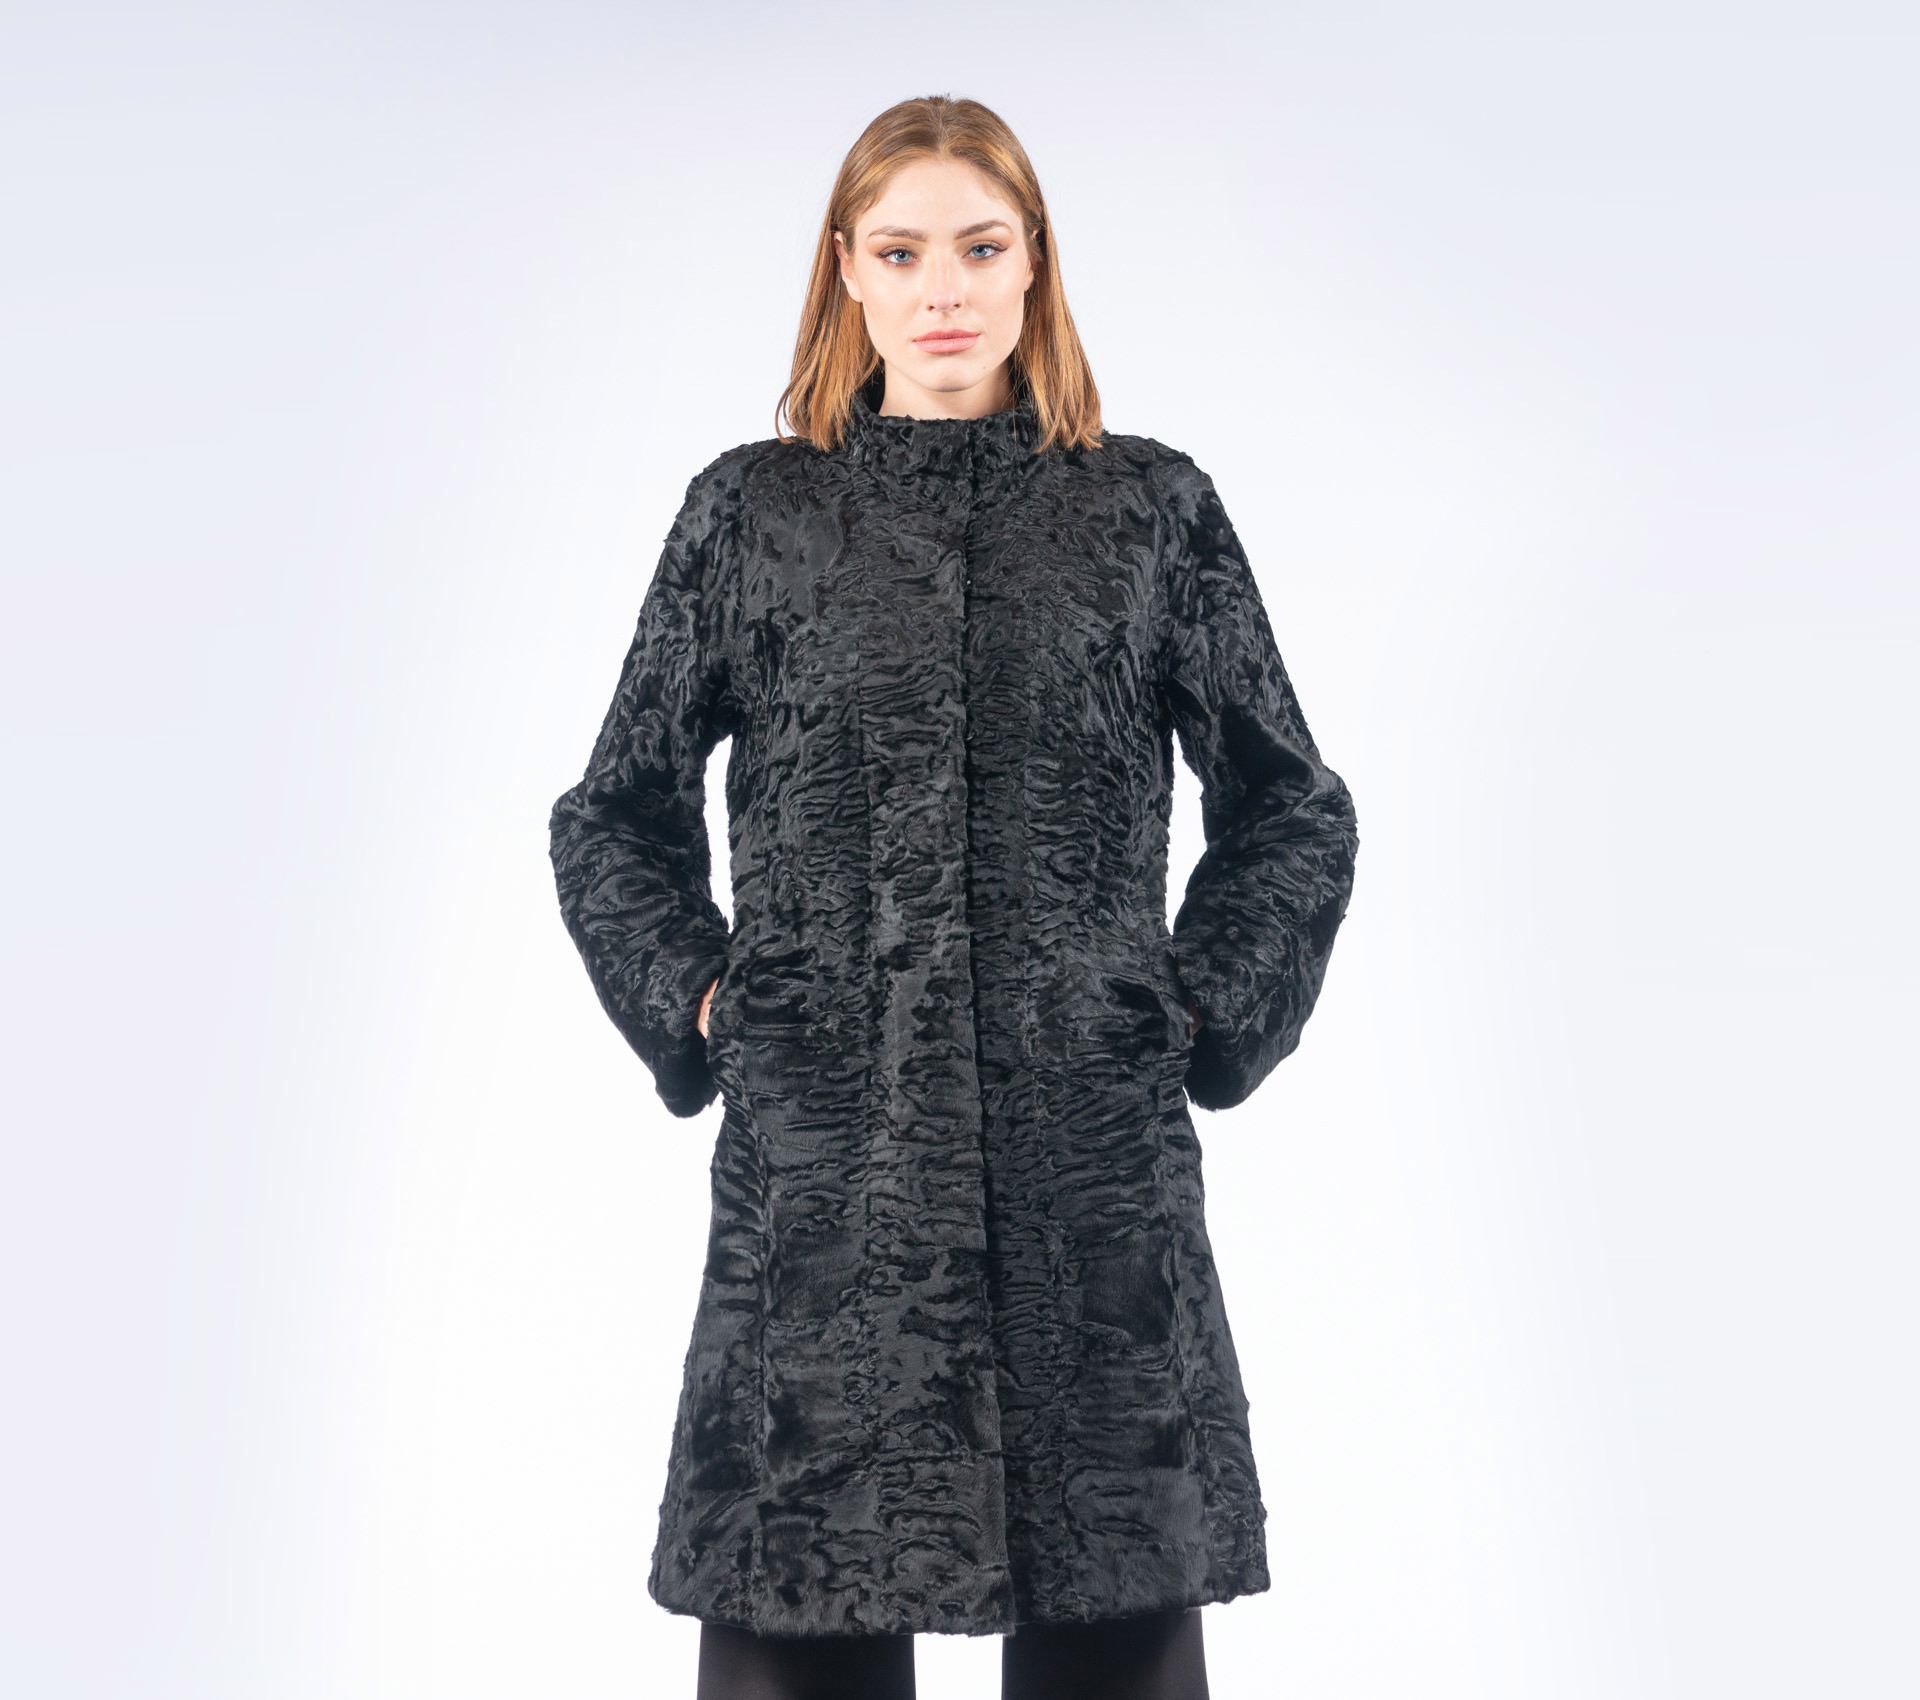 Astrakhan Fur Jacket In Black Color- 100% Real Fur Coats - Haute Acorn